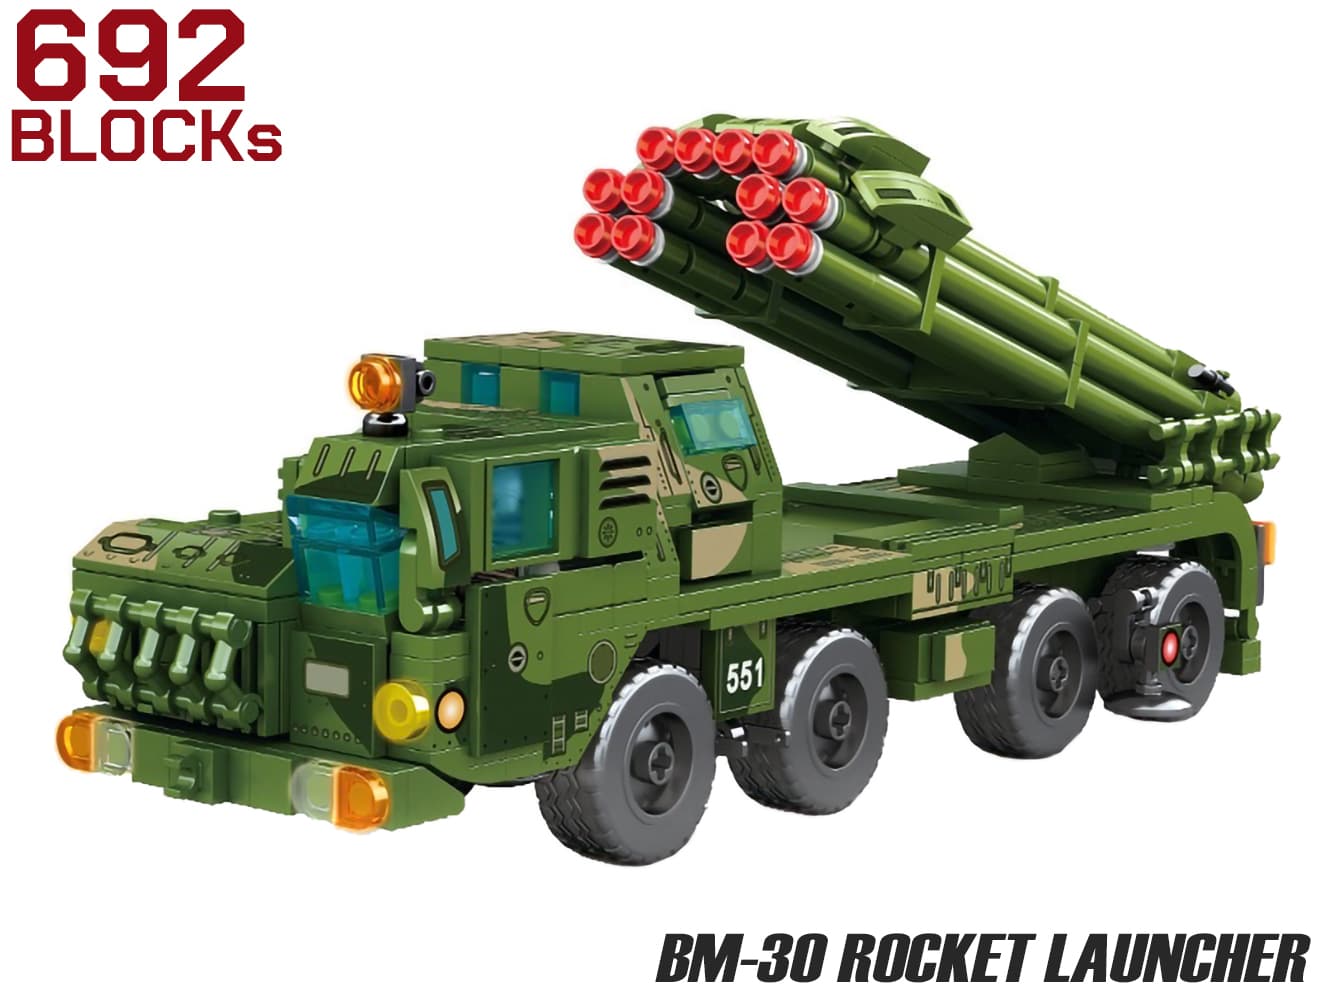 AFM BM-30 スメルチ ロケットランチャー 692Blocks | ミリタリーベース ...